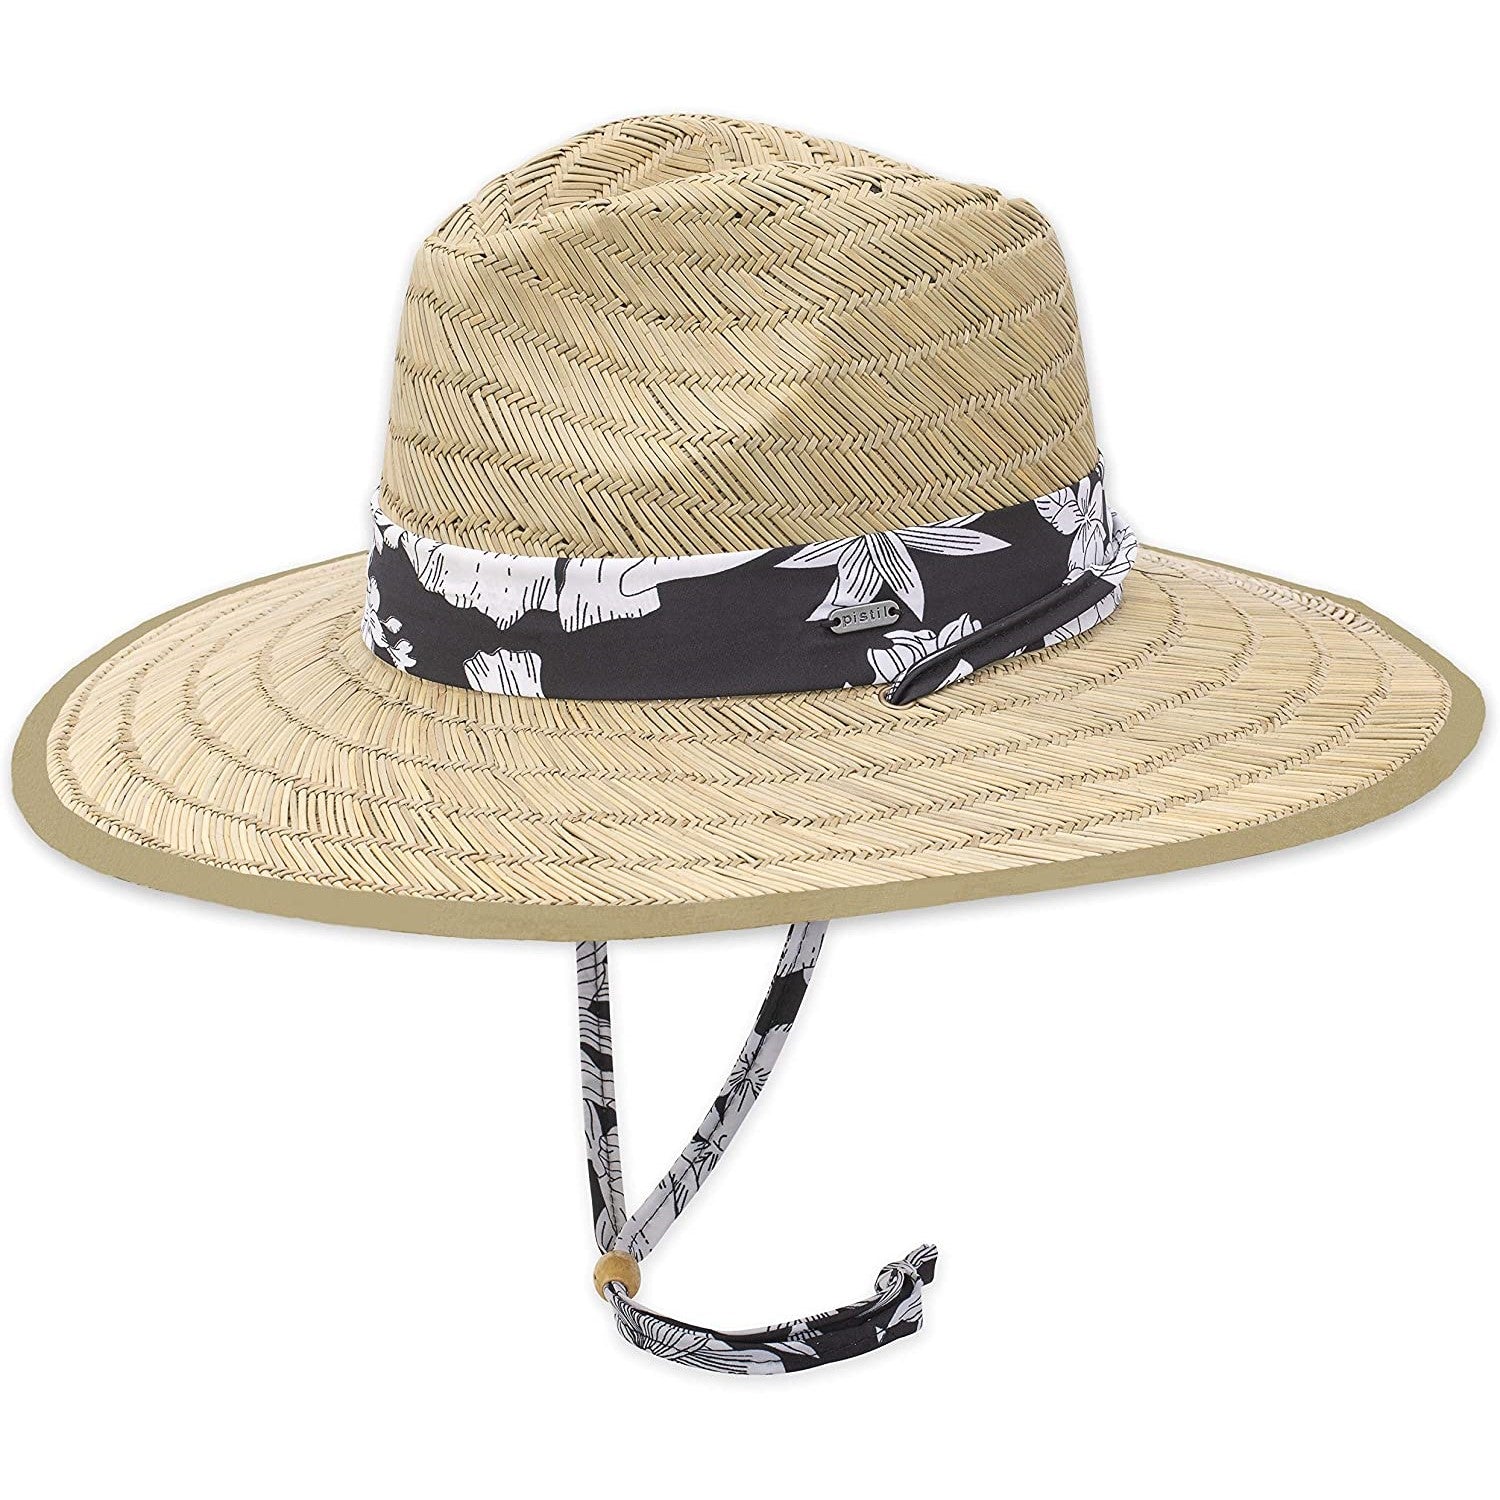 Del Mar Sun Hat  - Black